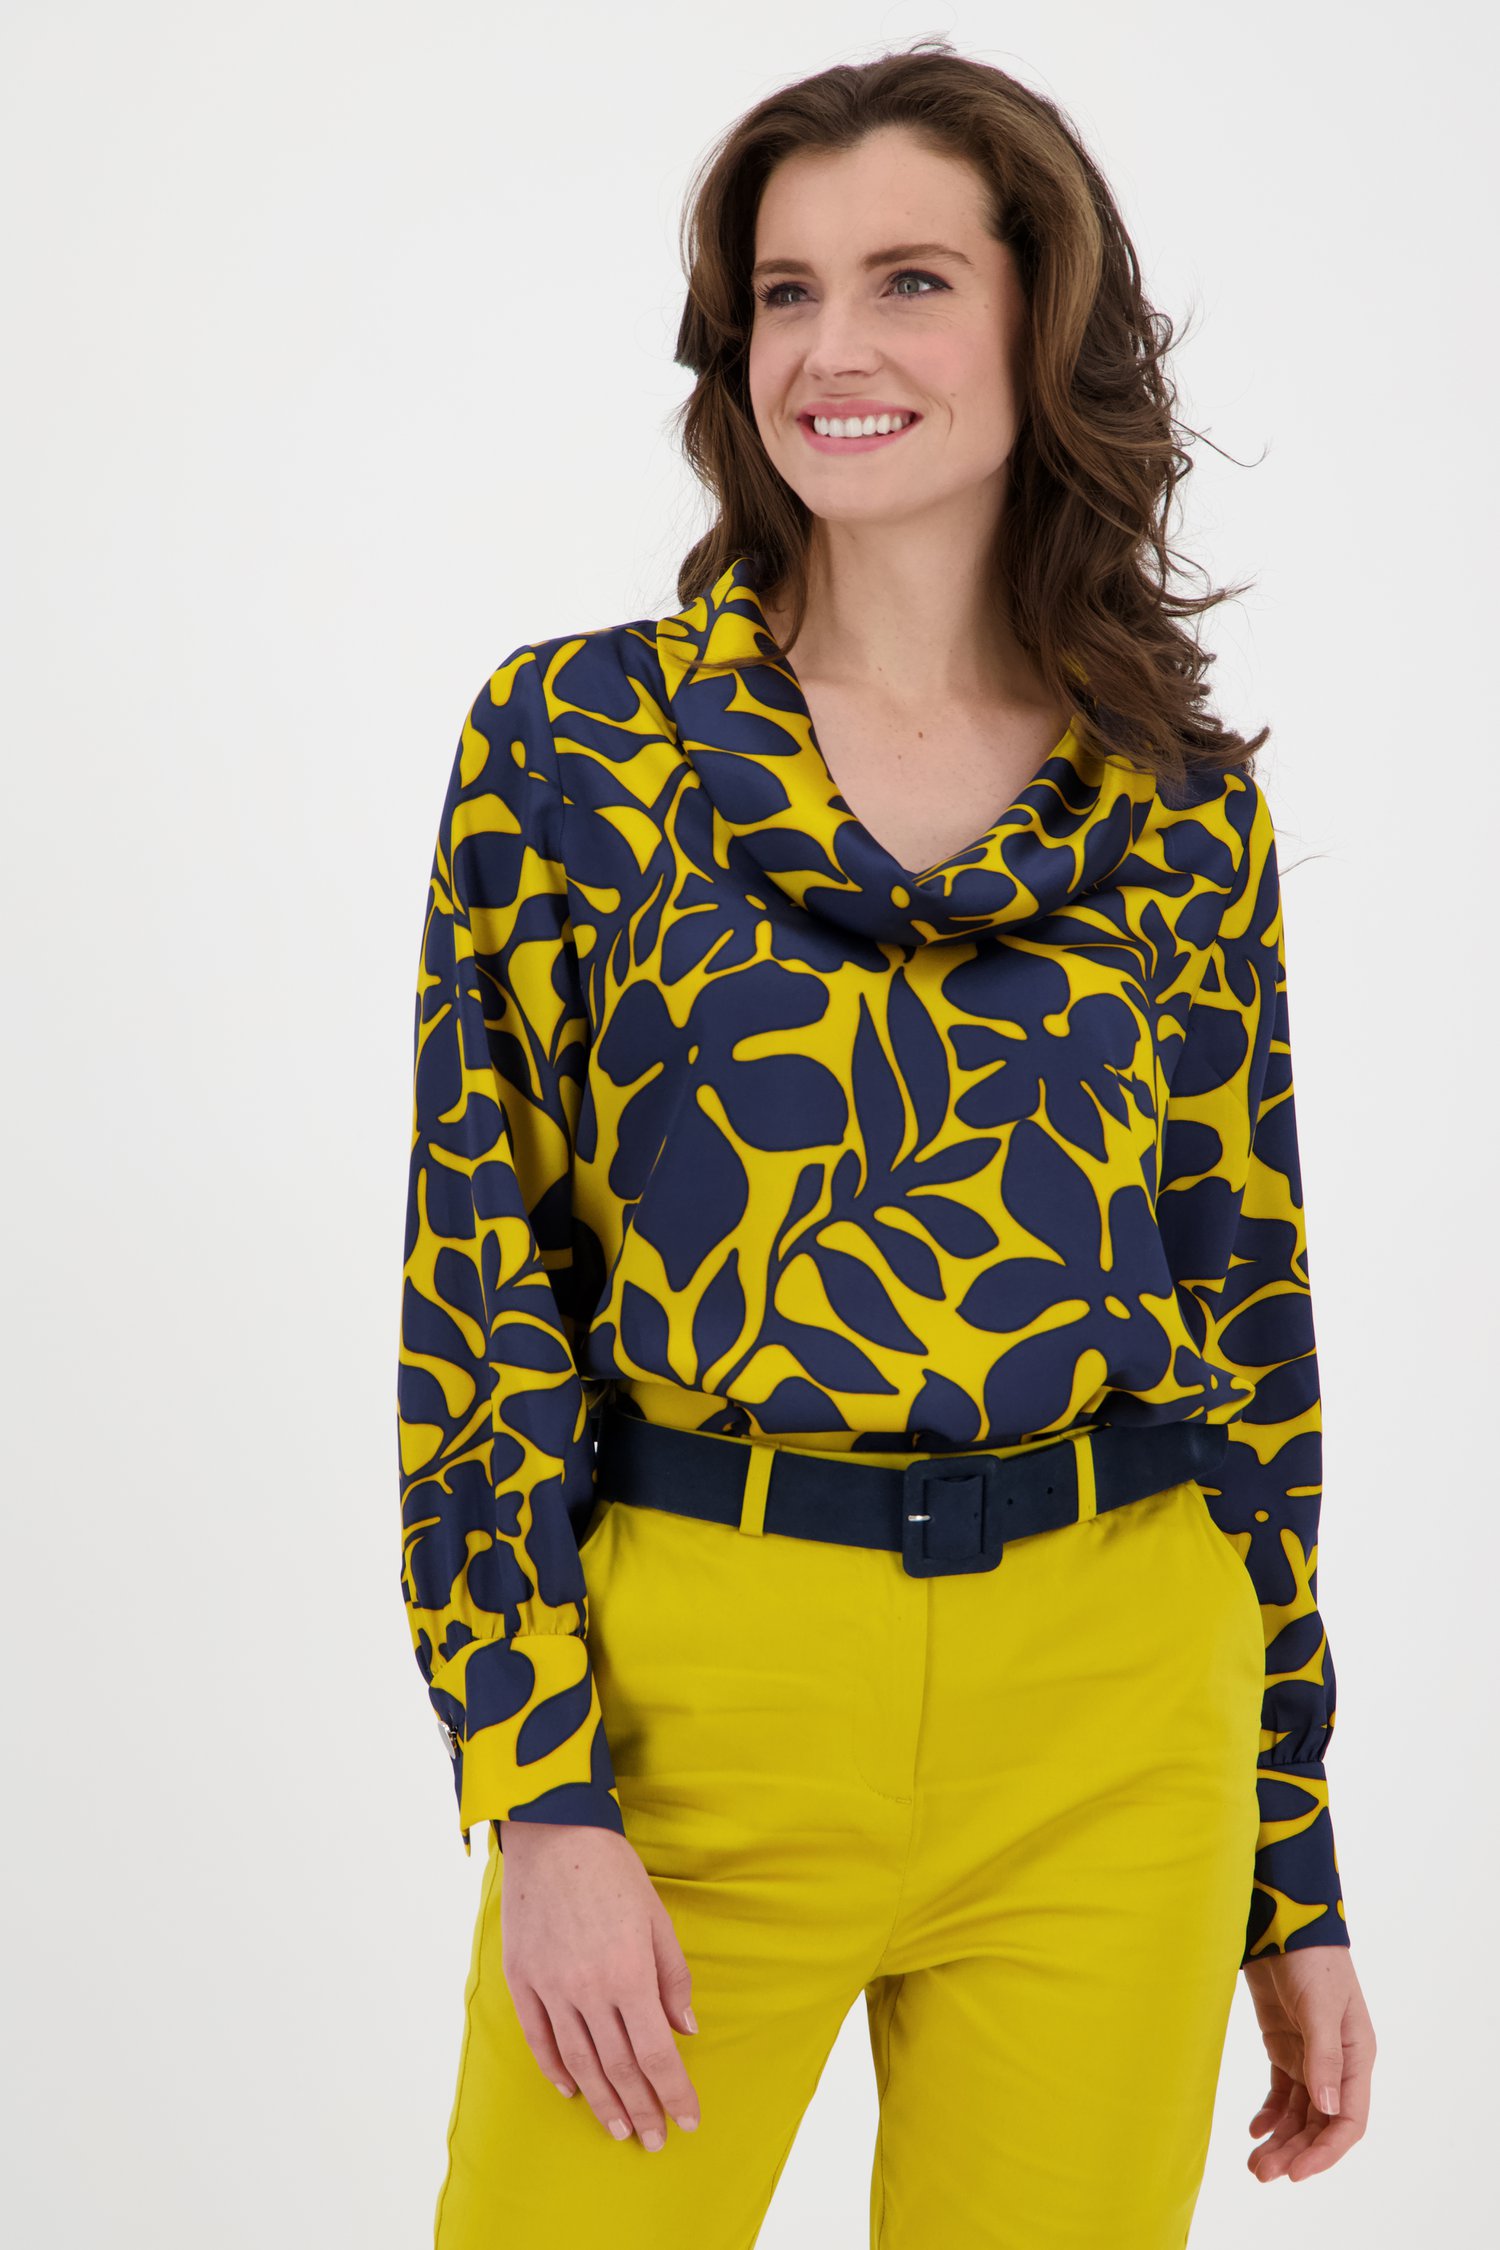 karakter Microbe adviseren Gele blouse met donkerblauwe bloemenprint van D'Auvry | 6871640 | e5